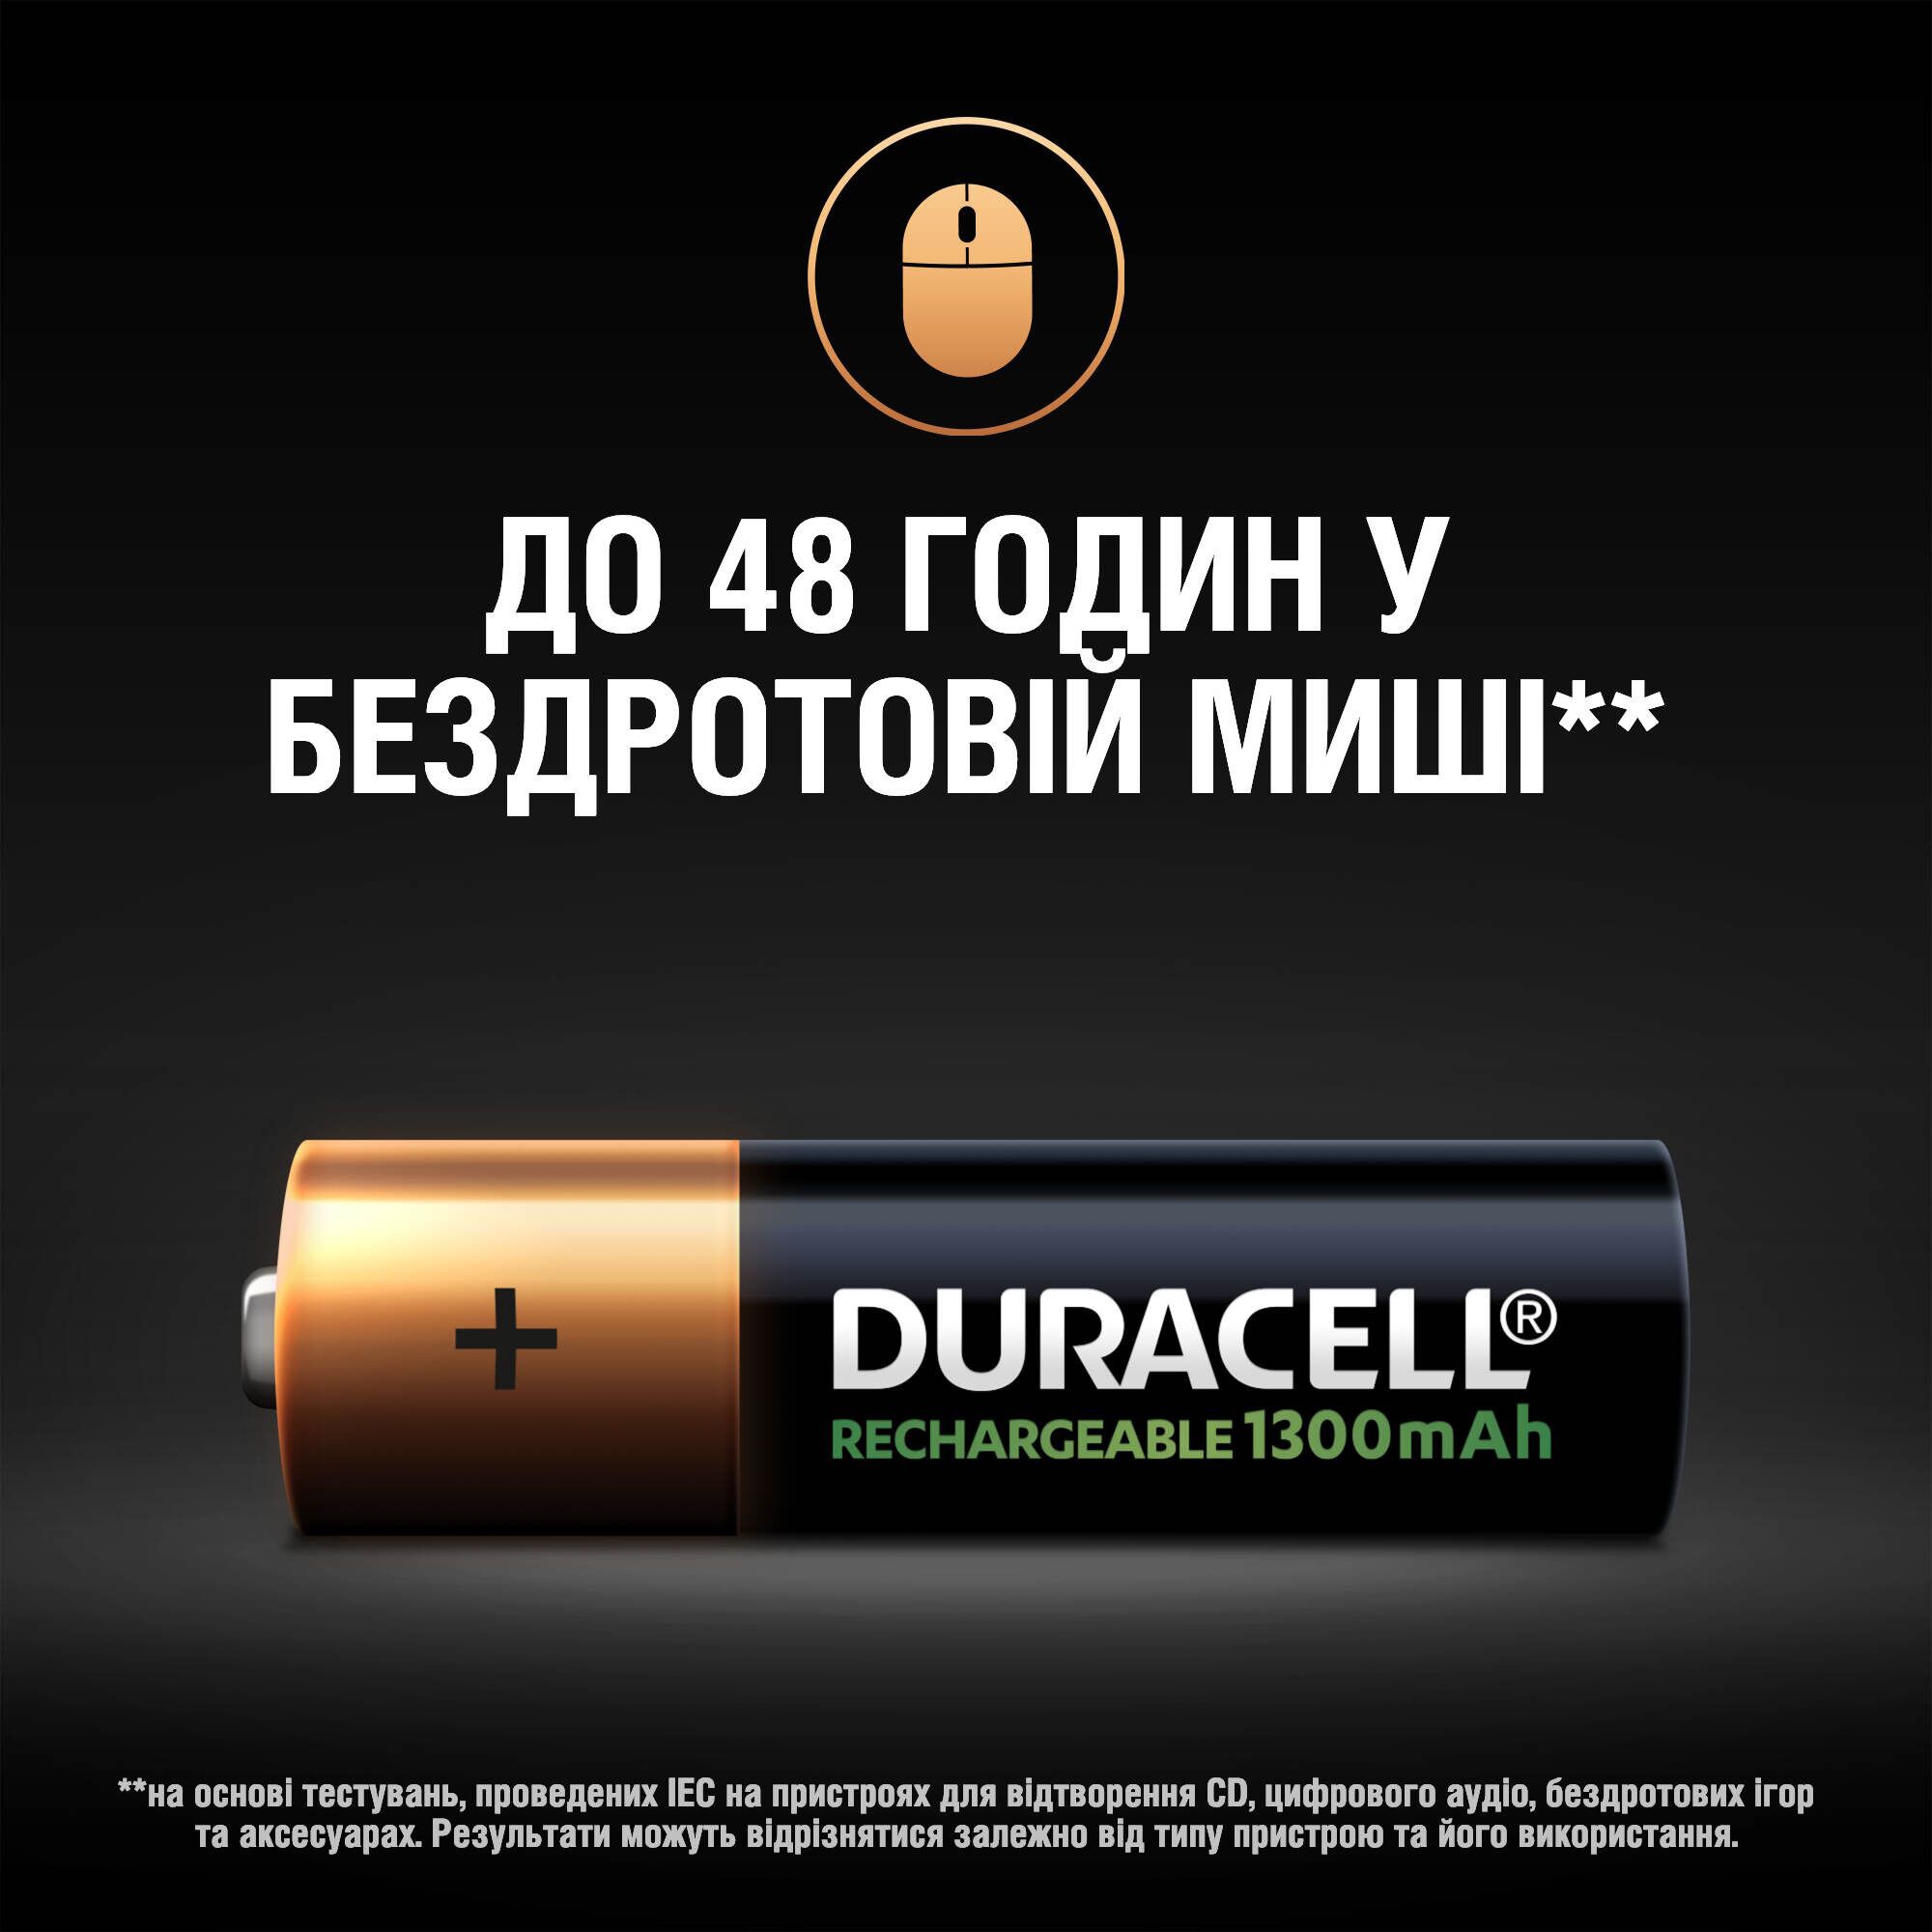 Аккумулятор Duracell Recharge AA 1300 mAh 4 шт. отзывы - изображения 5